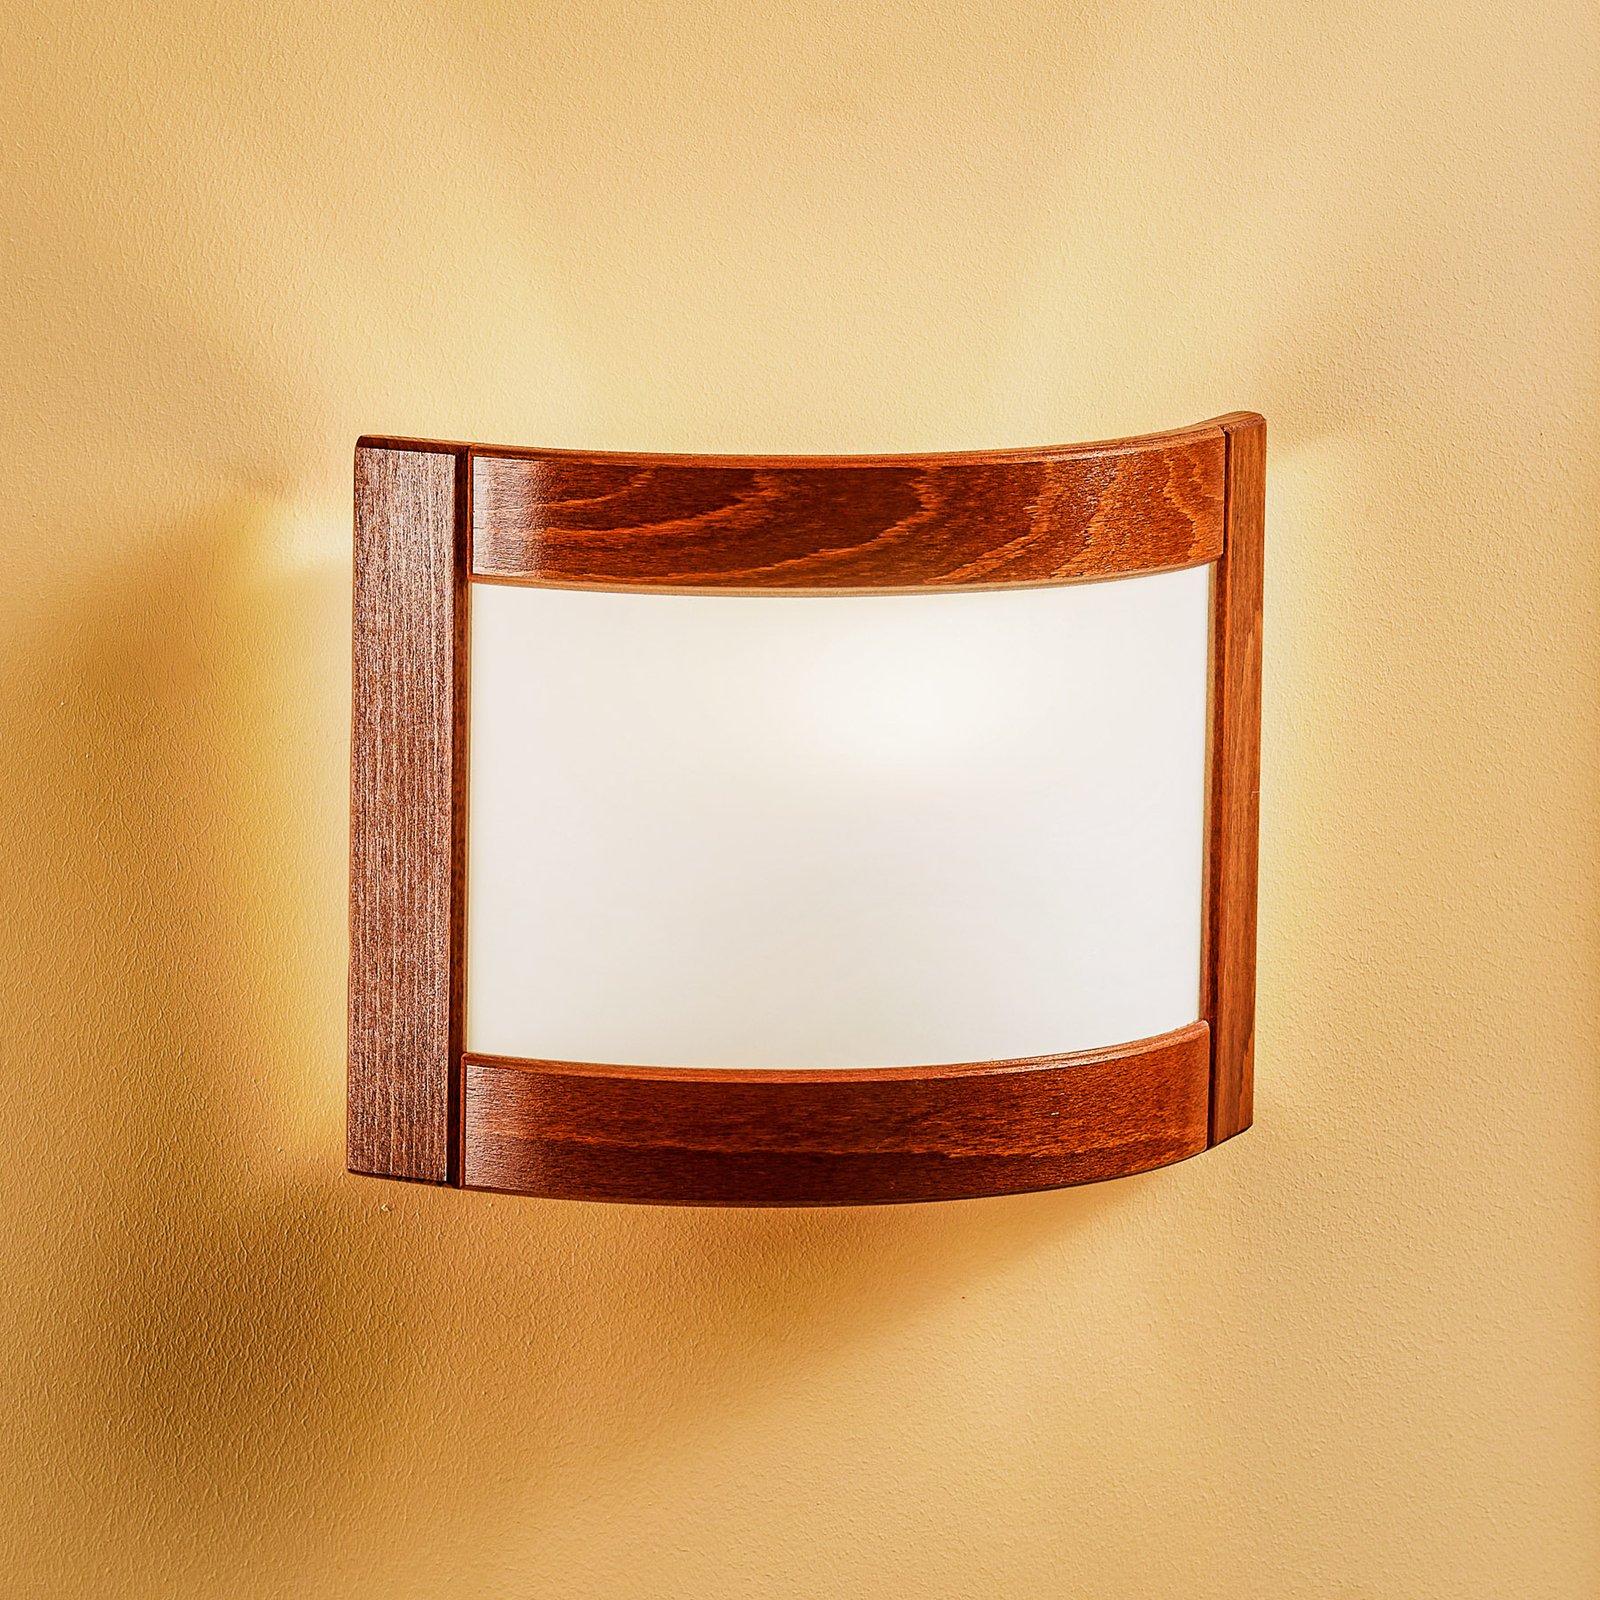 Zanna wall light made of wood, 22 cm high, rustic